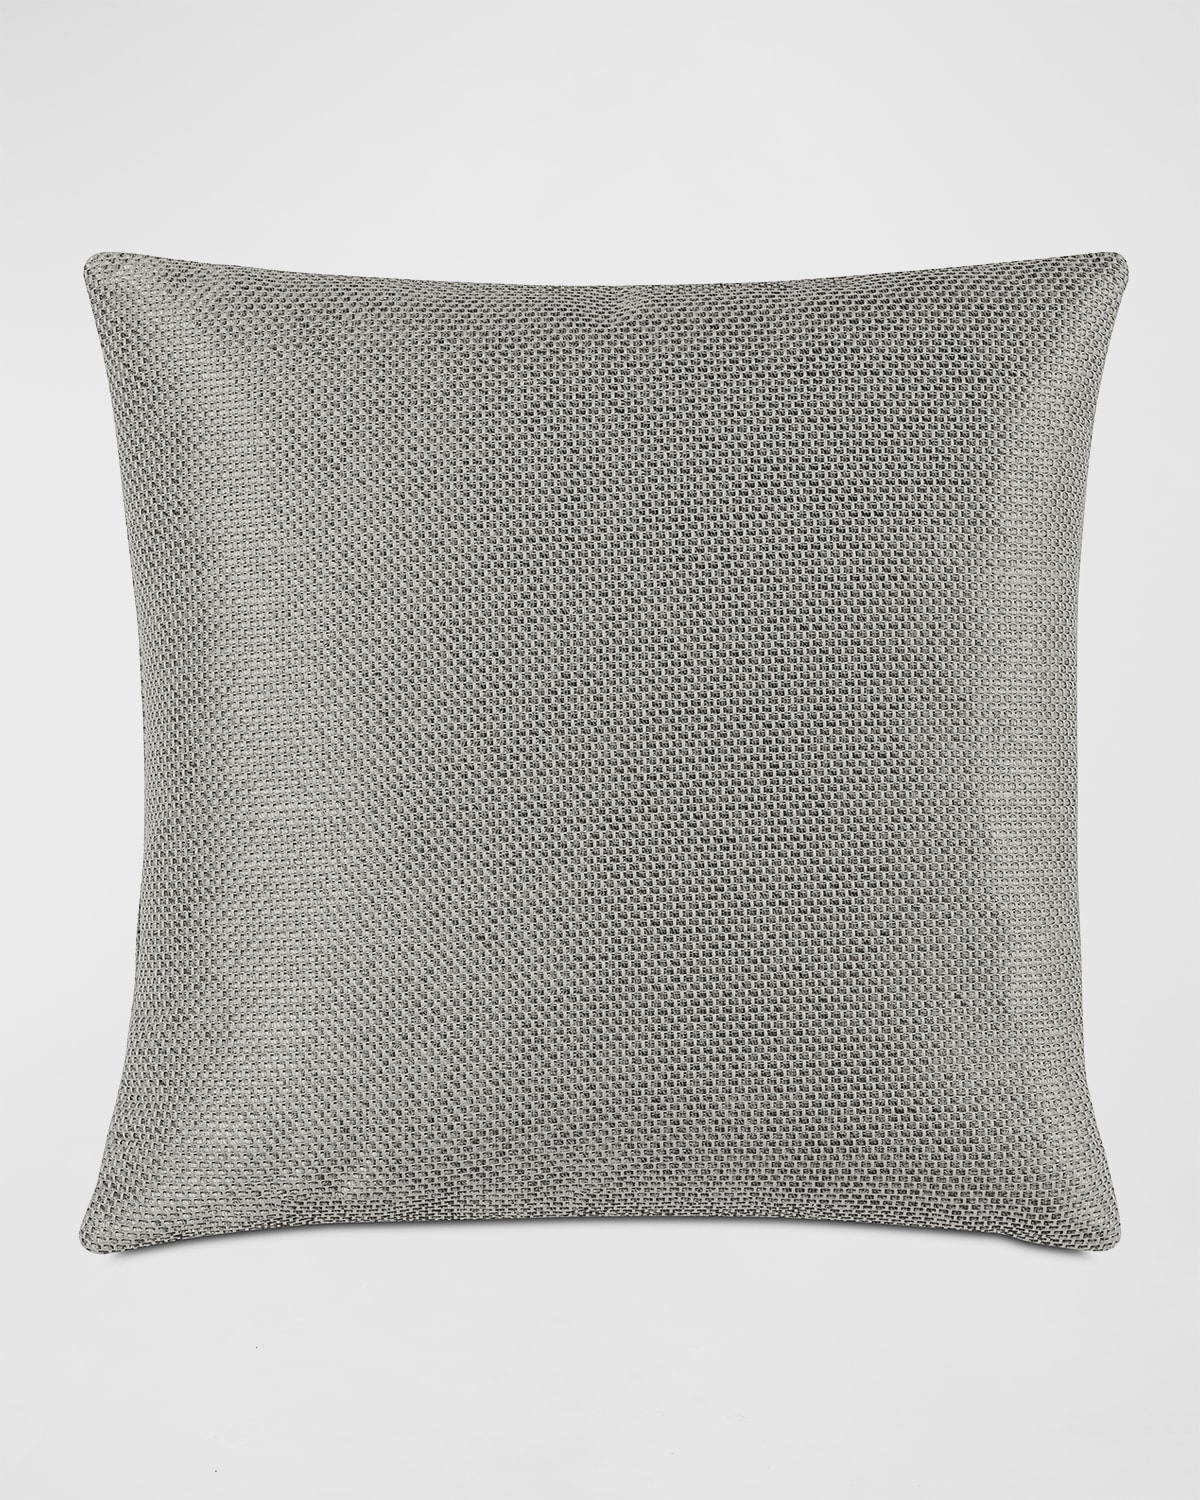 Whistler Decorative Pillow, 20" x 20"